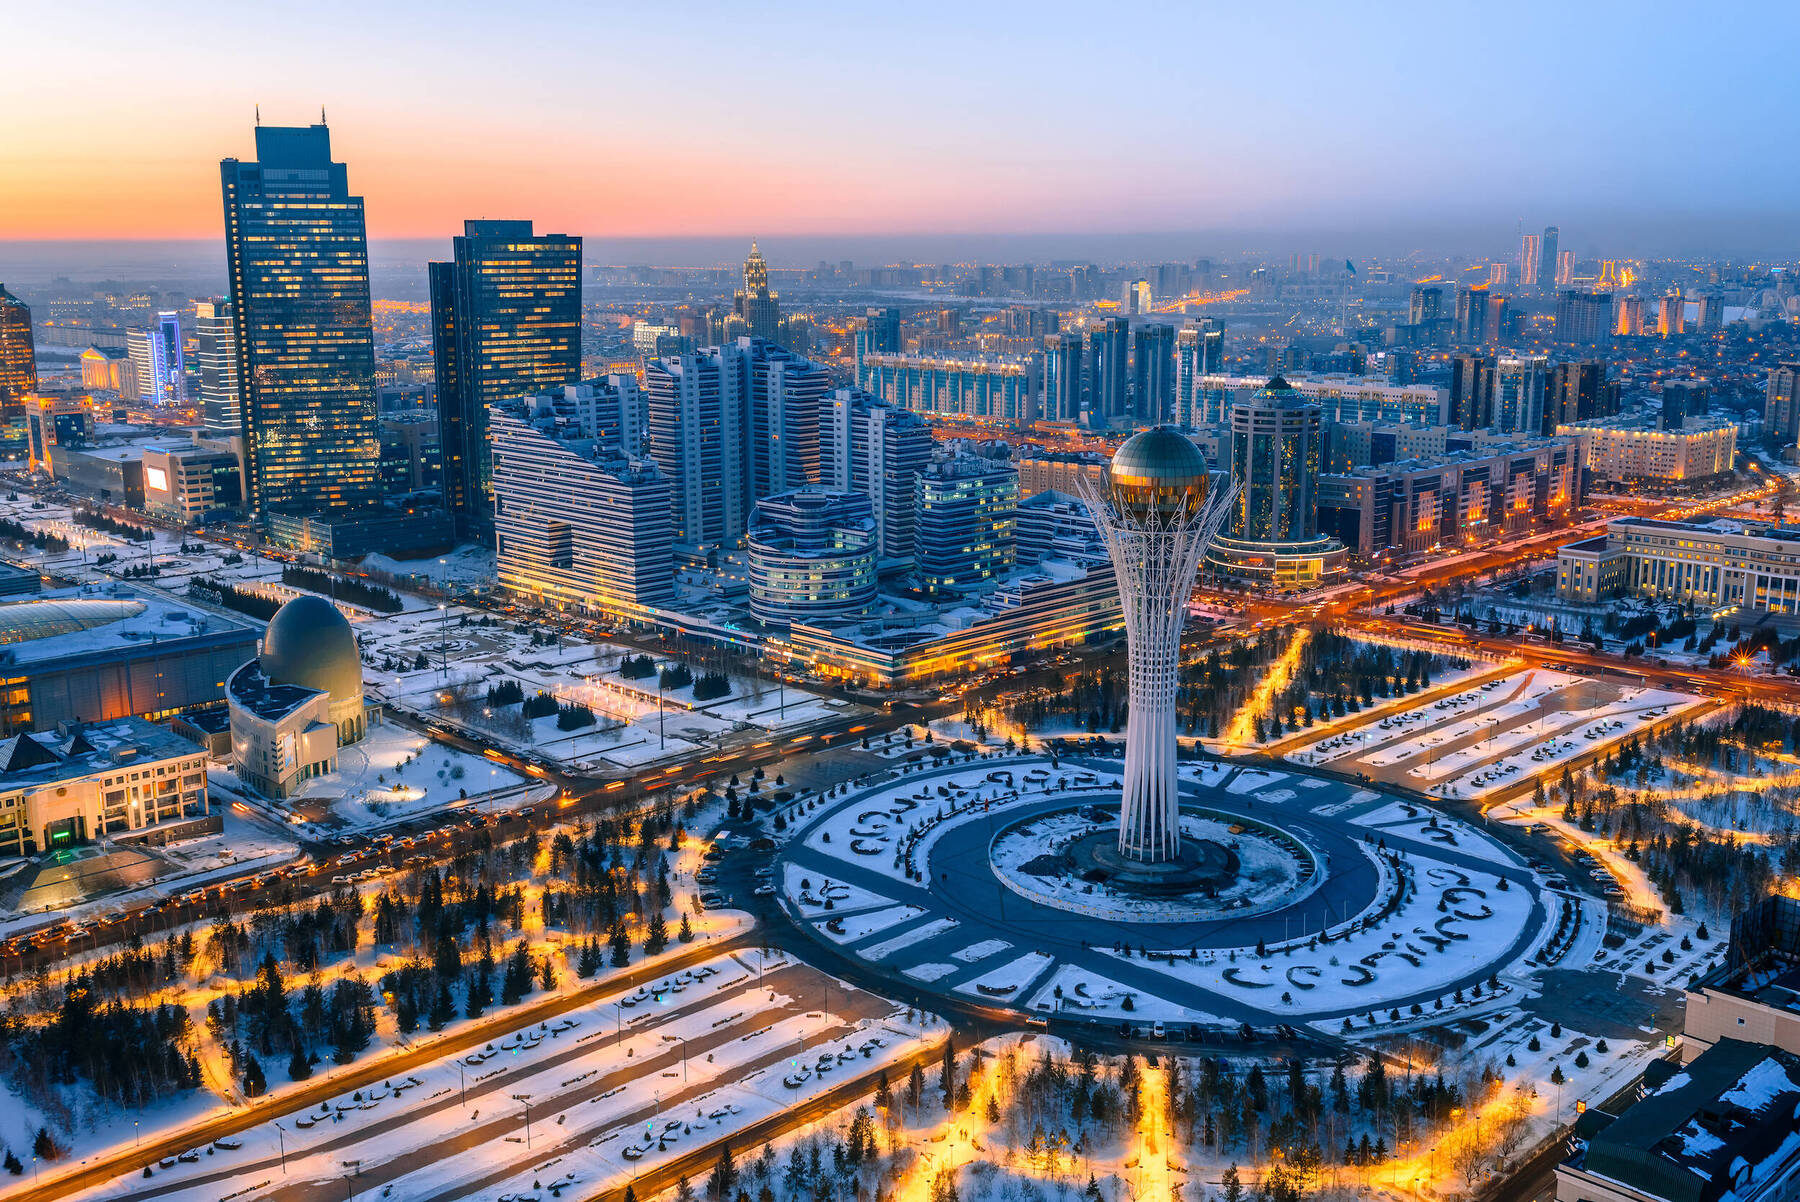 How to Spend a Weekend in Nur-Sultan, Kazakhstan